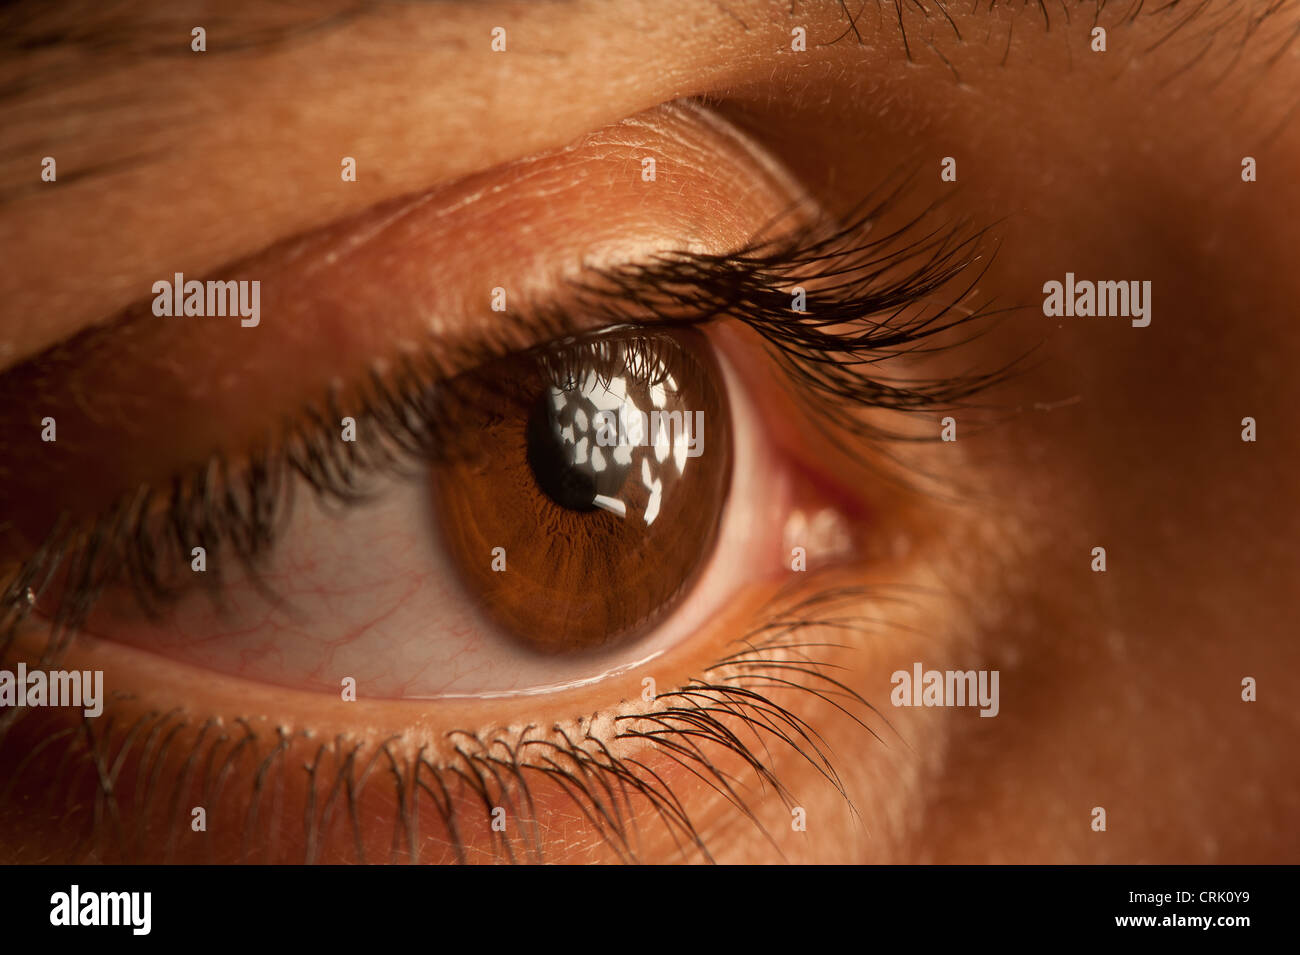 Brown human eye close up with detailed structure of iris pupil eyelid eye lashes eyelash Stock Photo